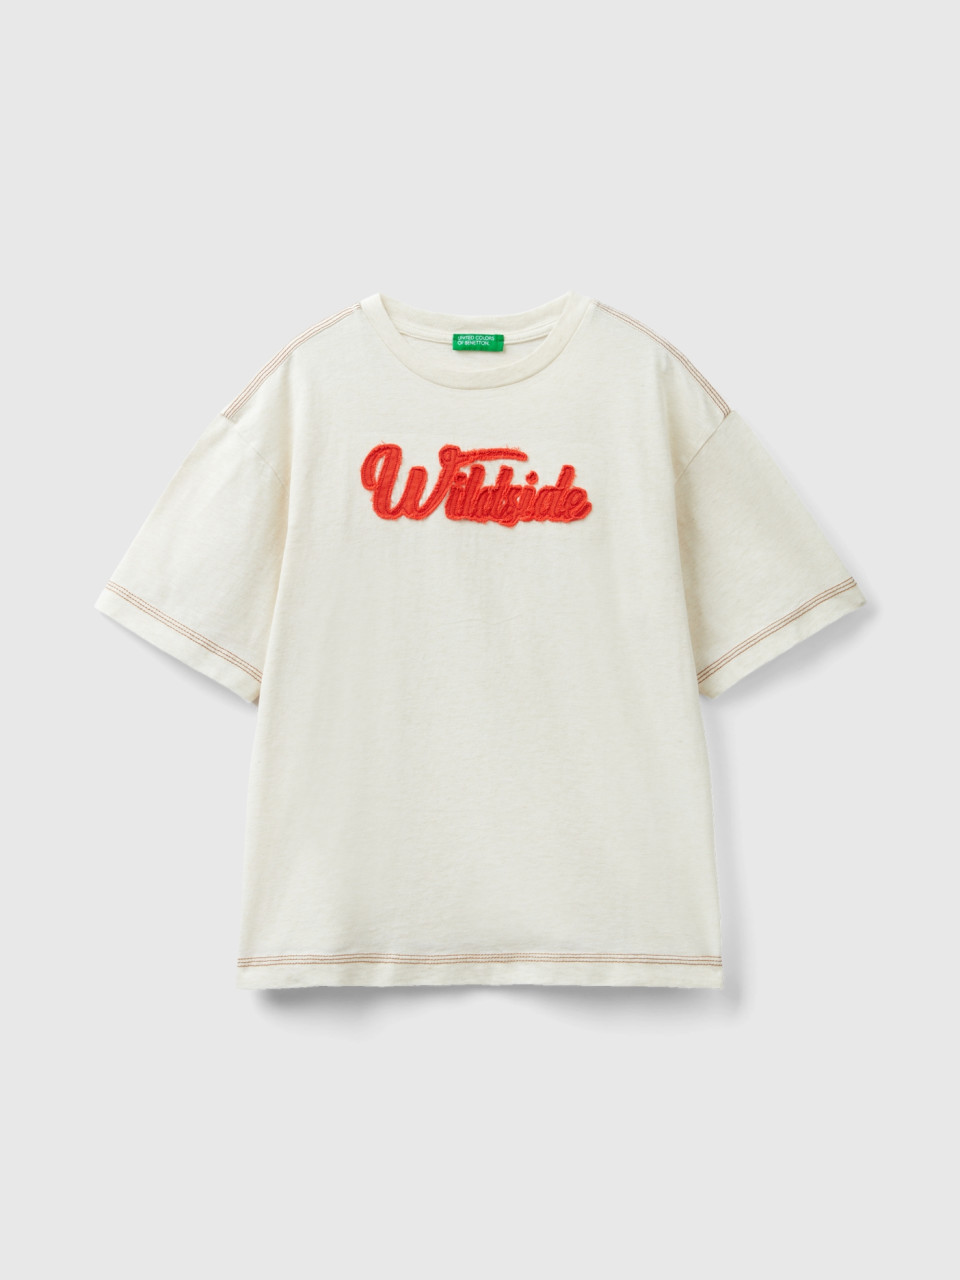 Benetton, T-shirt With Applique, Creamy White, Kids